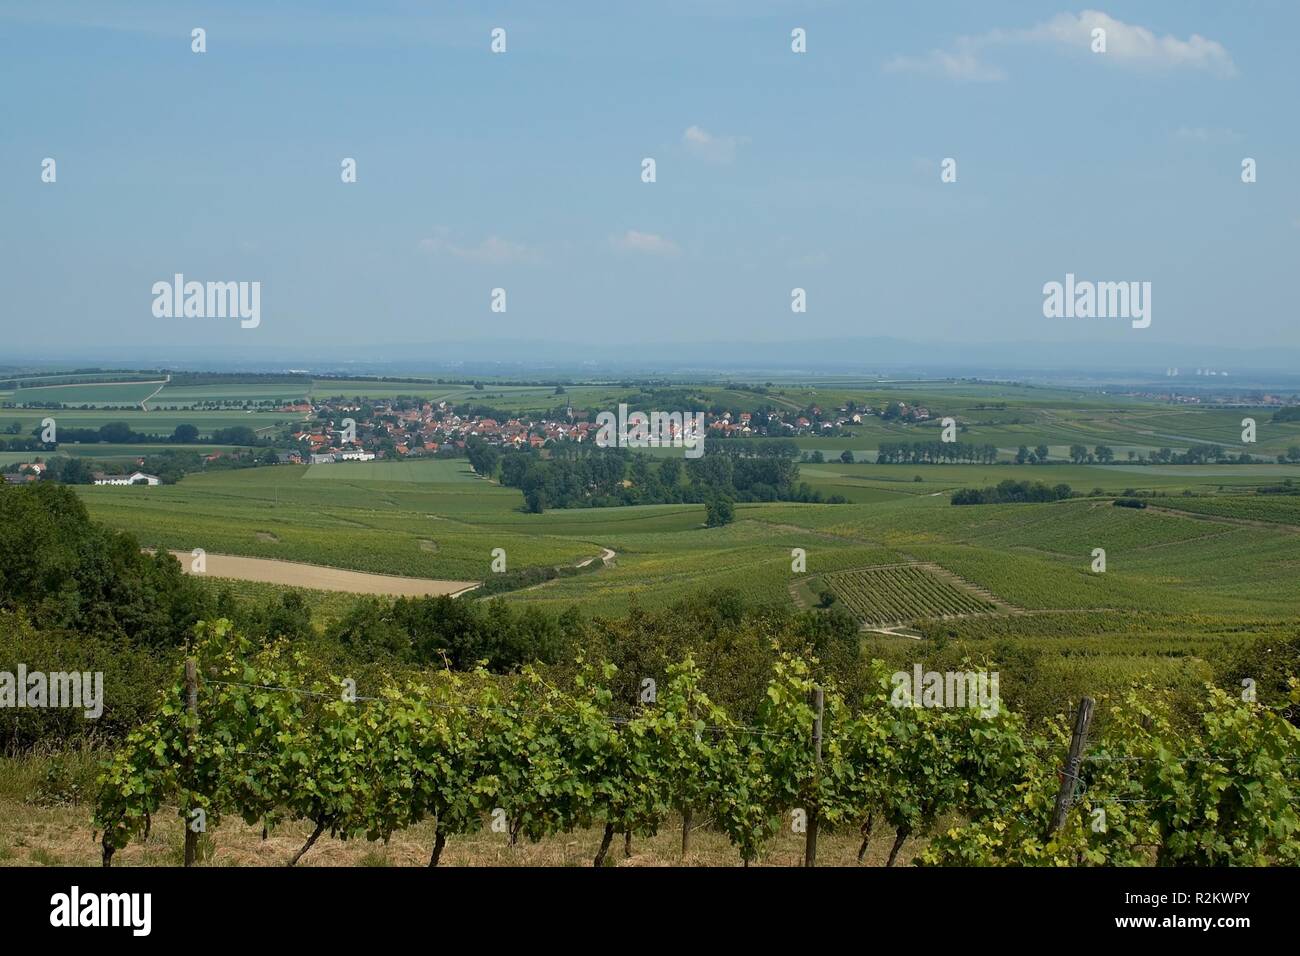 wine growing region i Stock Photo